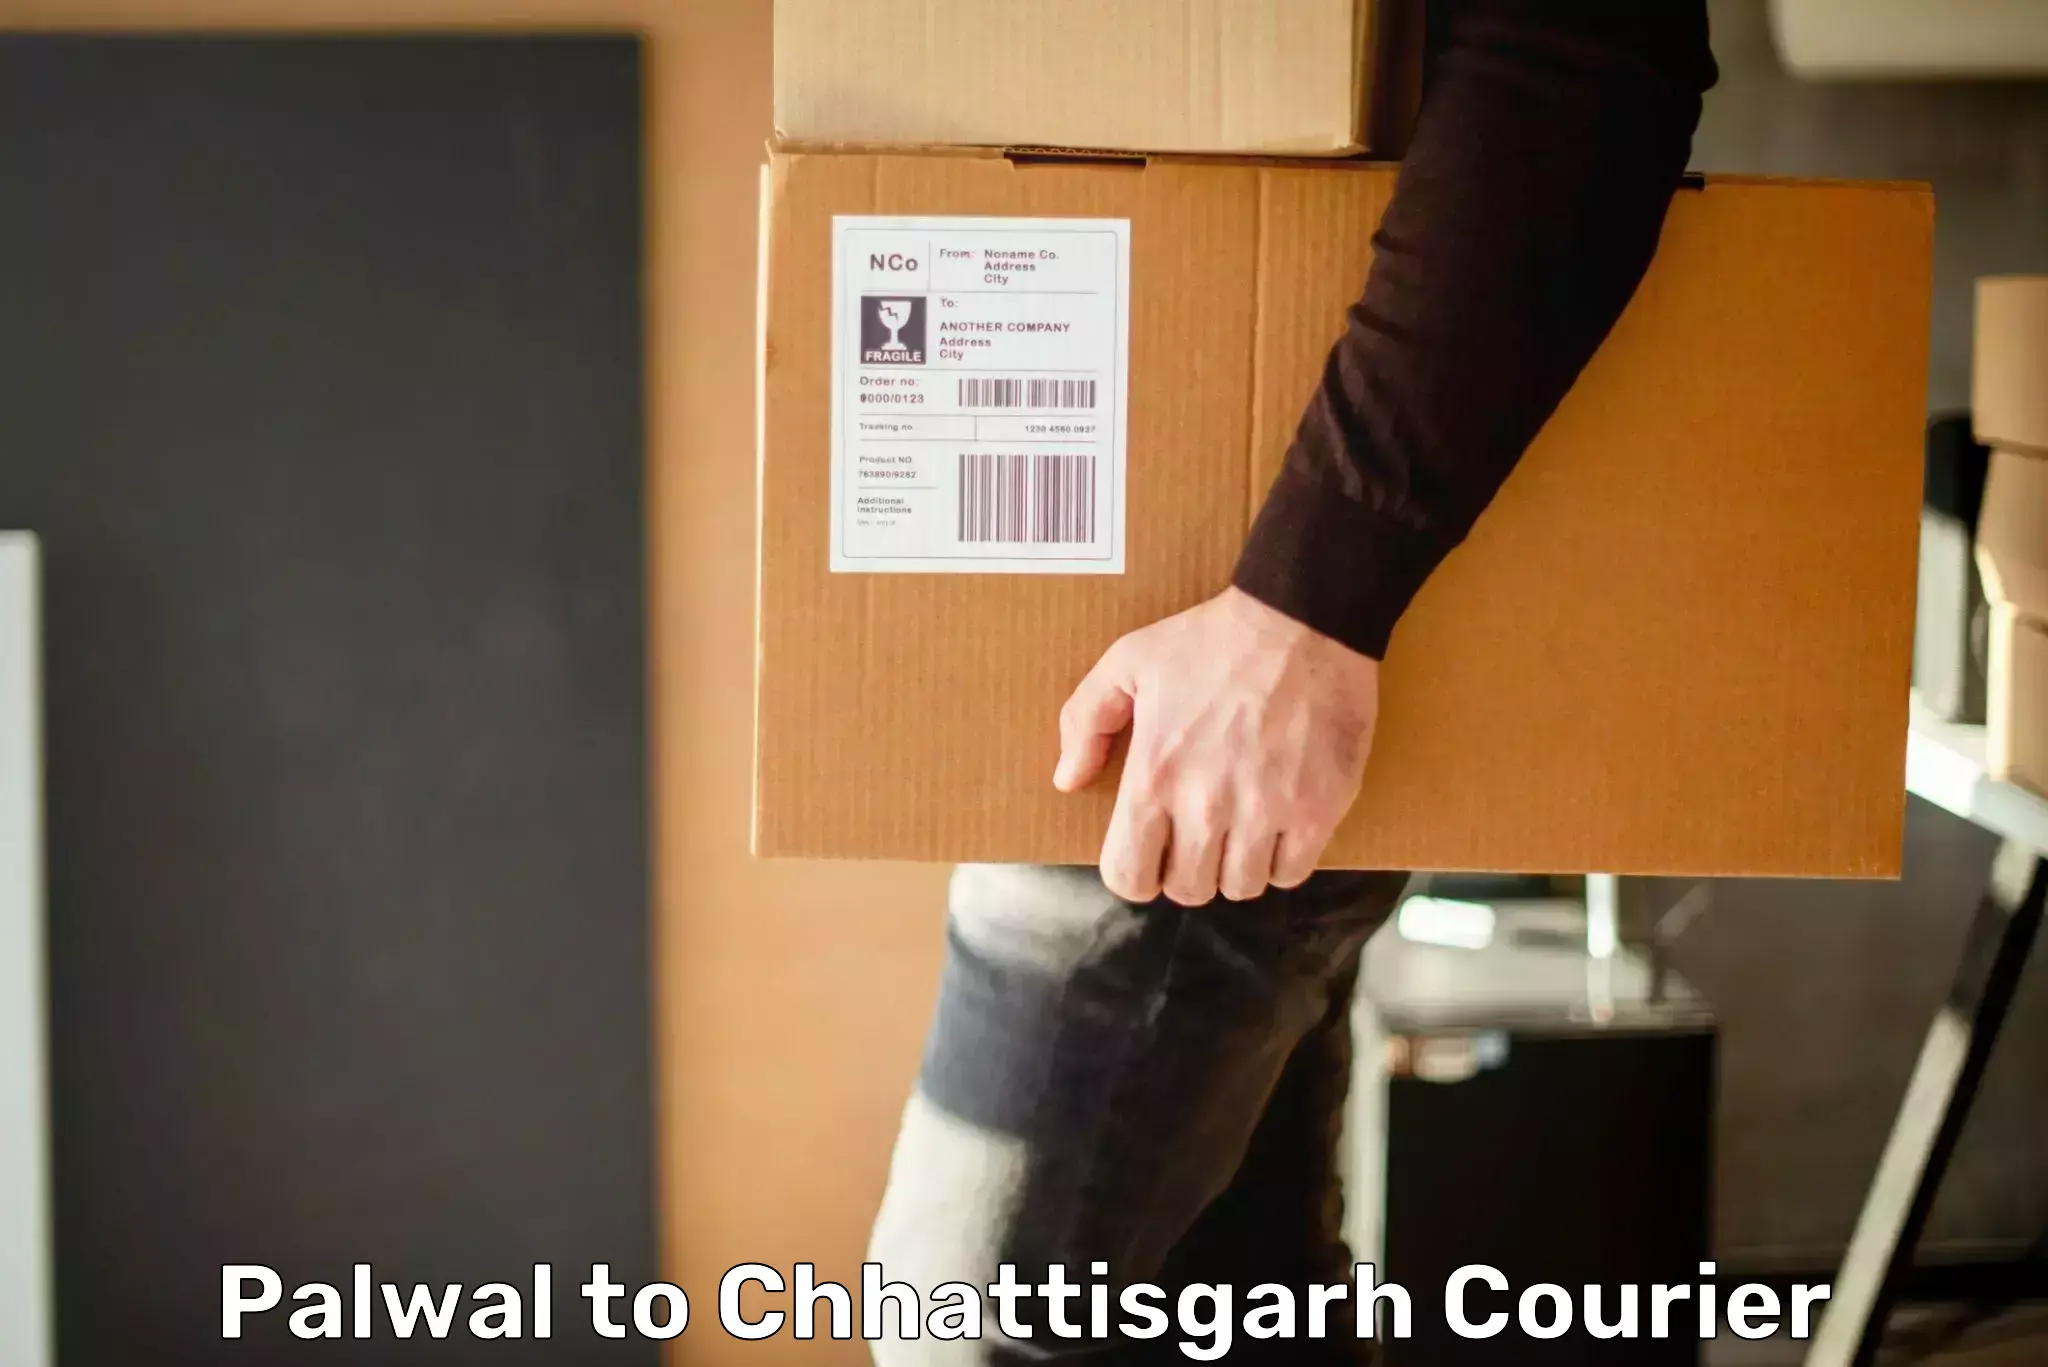 Courier service comparison Palwal to Bijapur Chhattisgarh